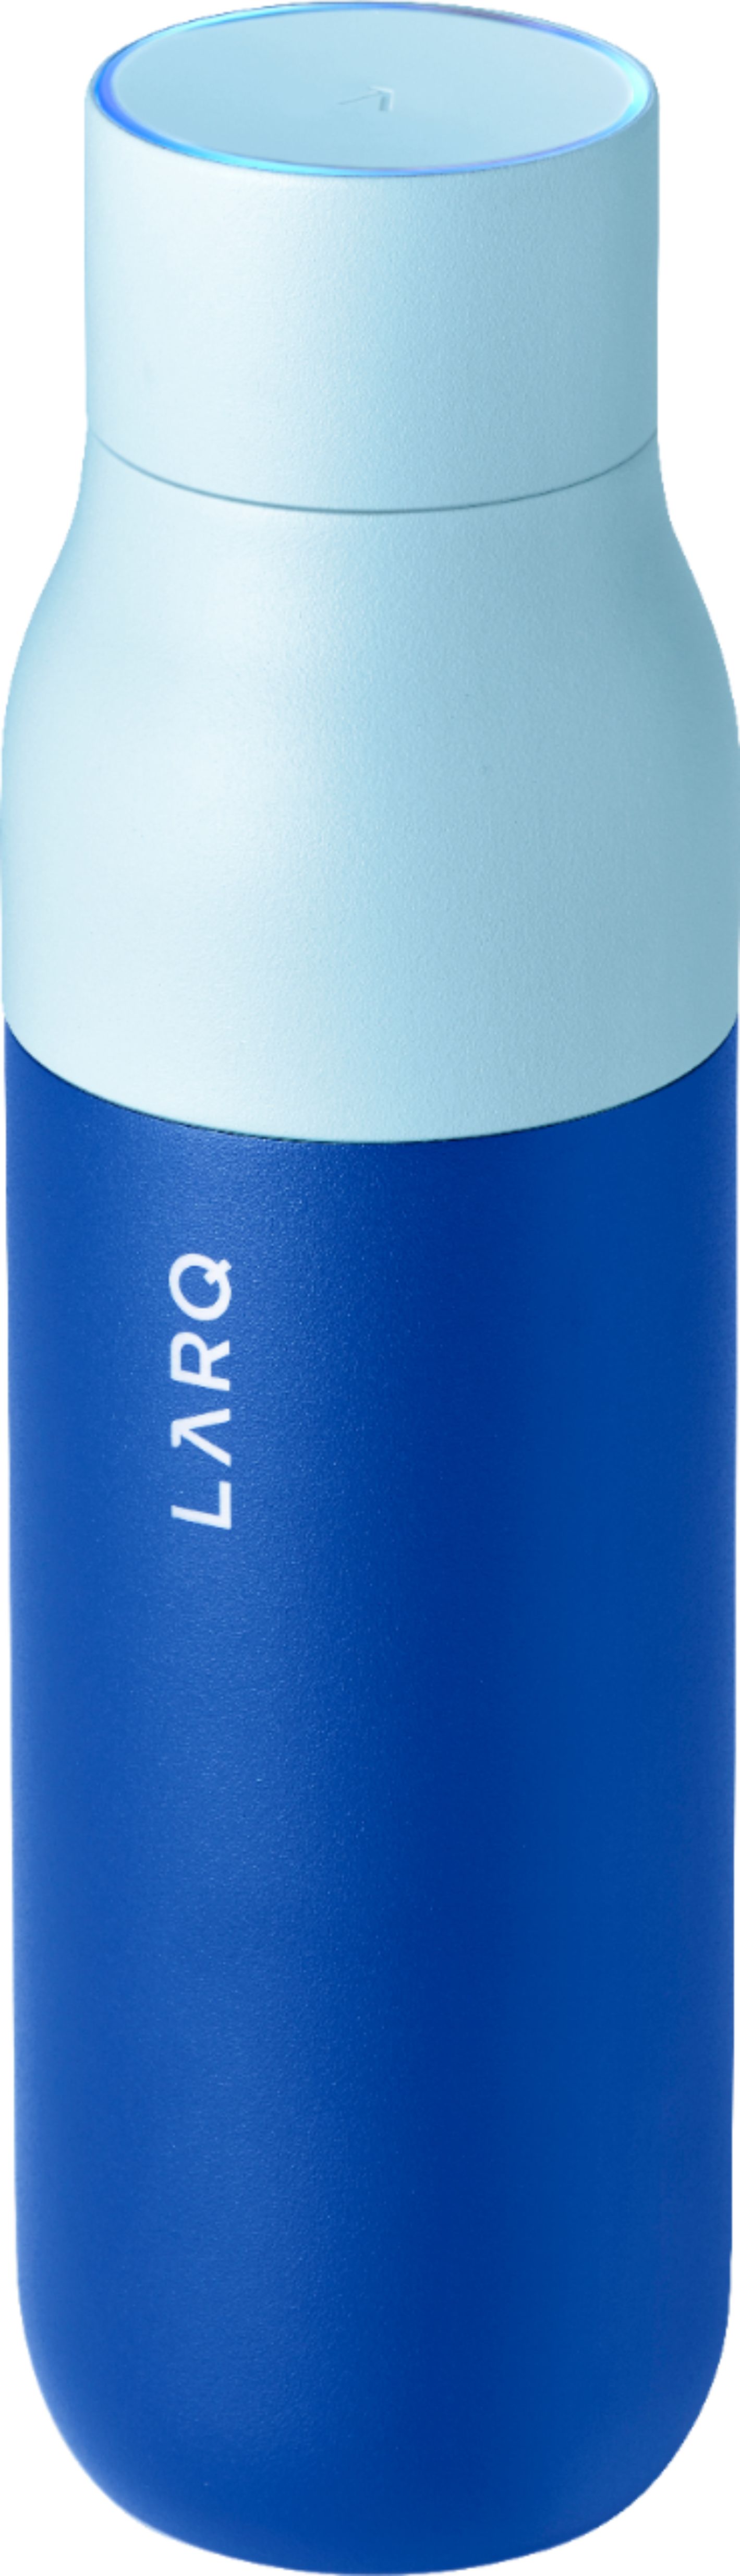 Angle View: LARQ Bottle DG23 - Electro Blue - 17 oz - Electro Blue